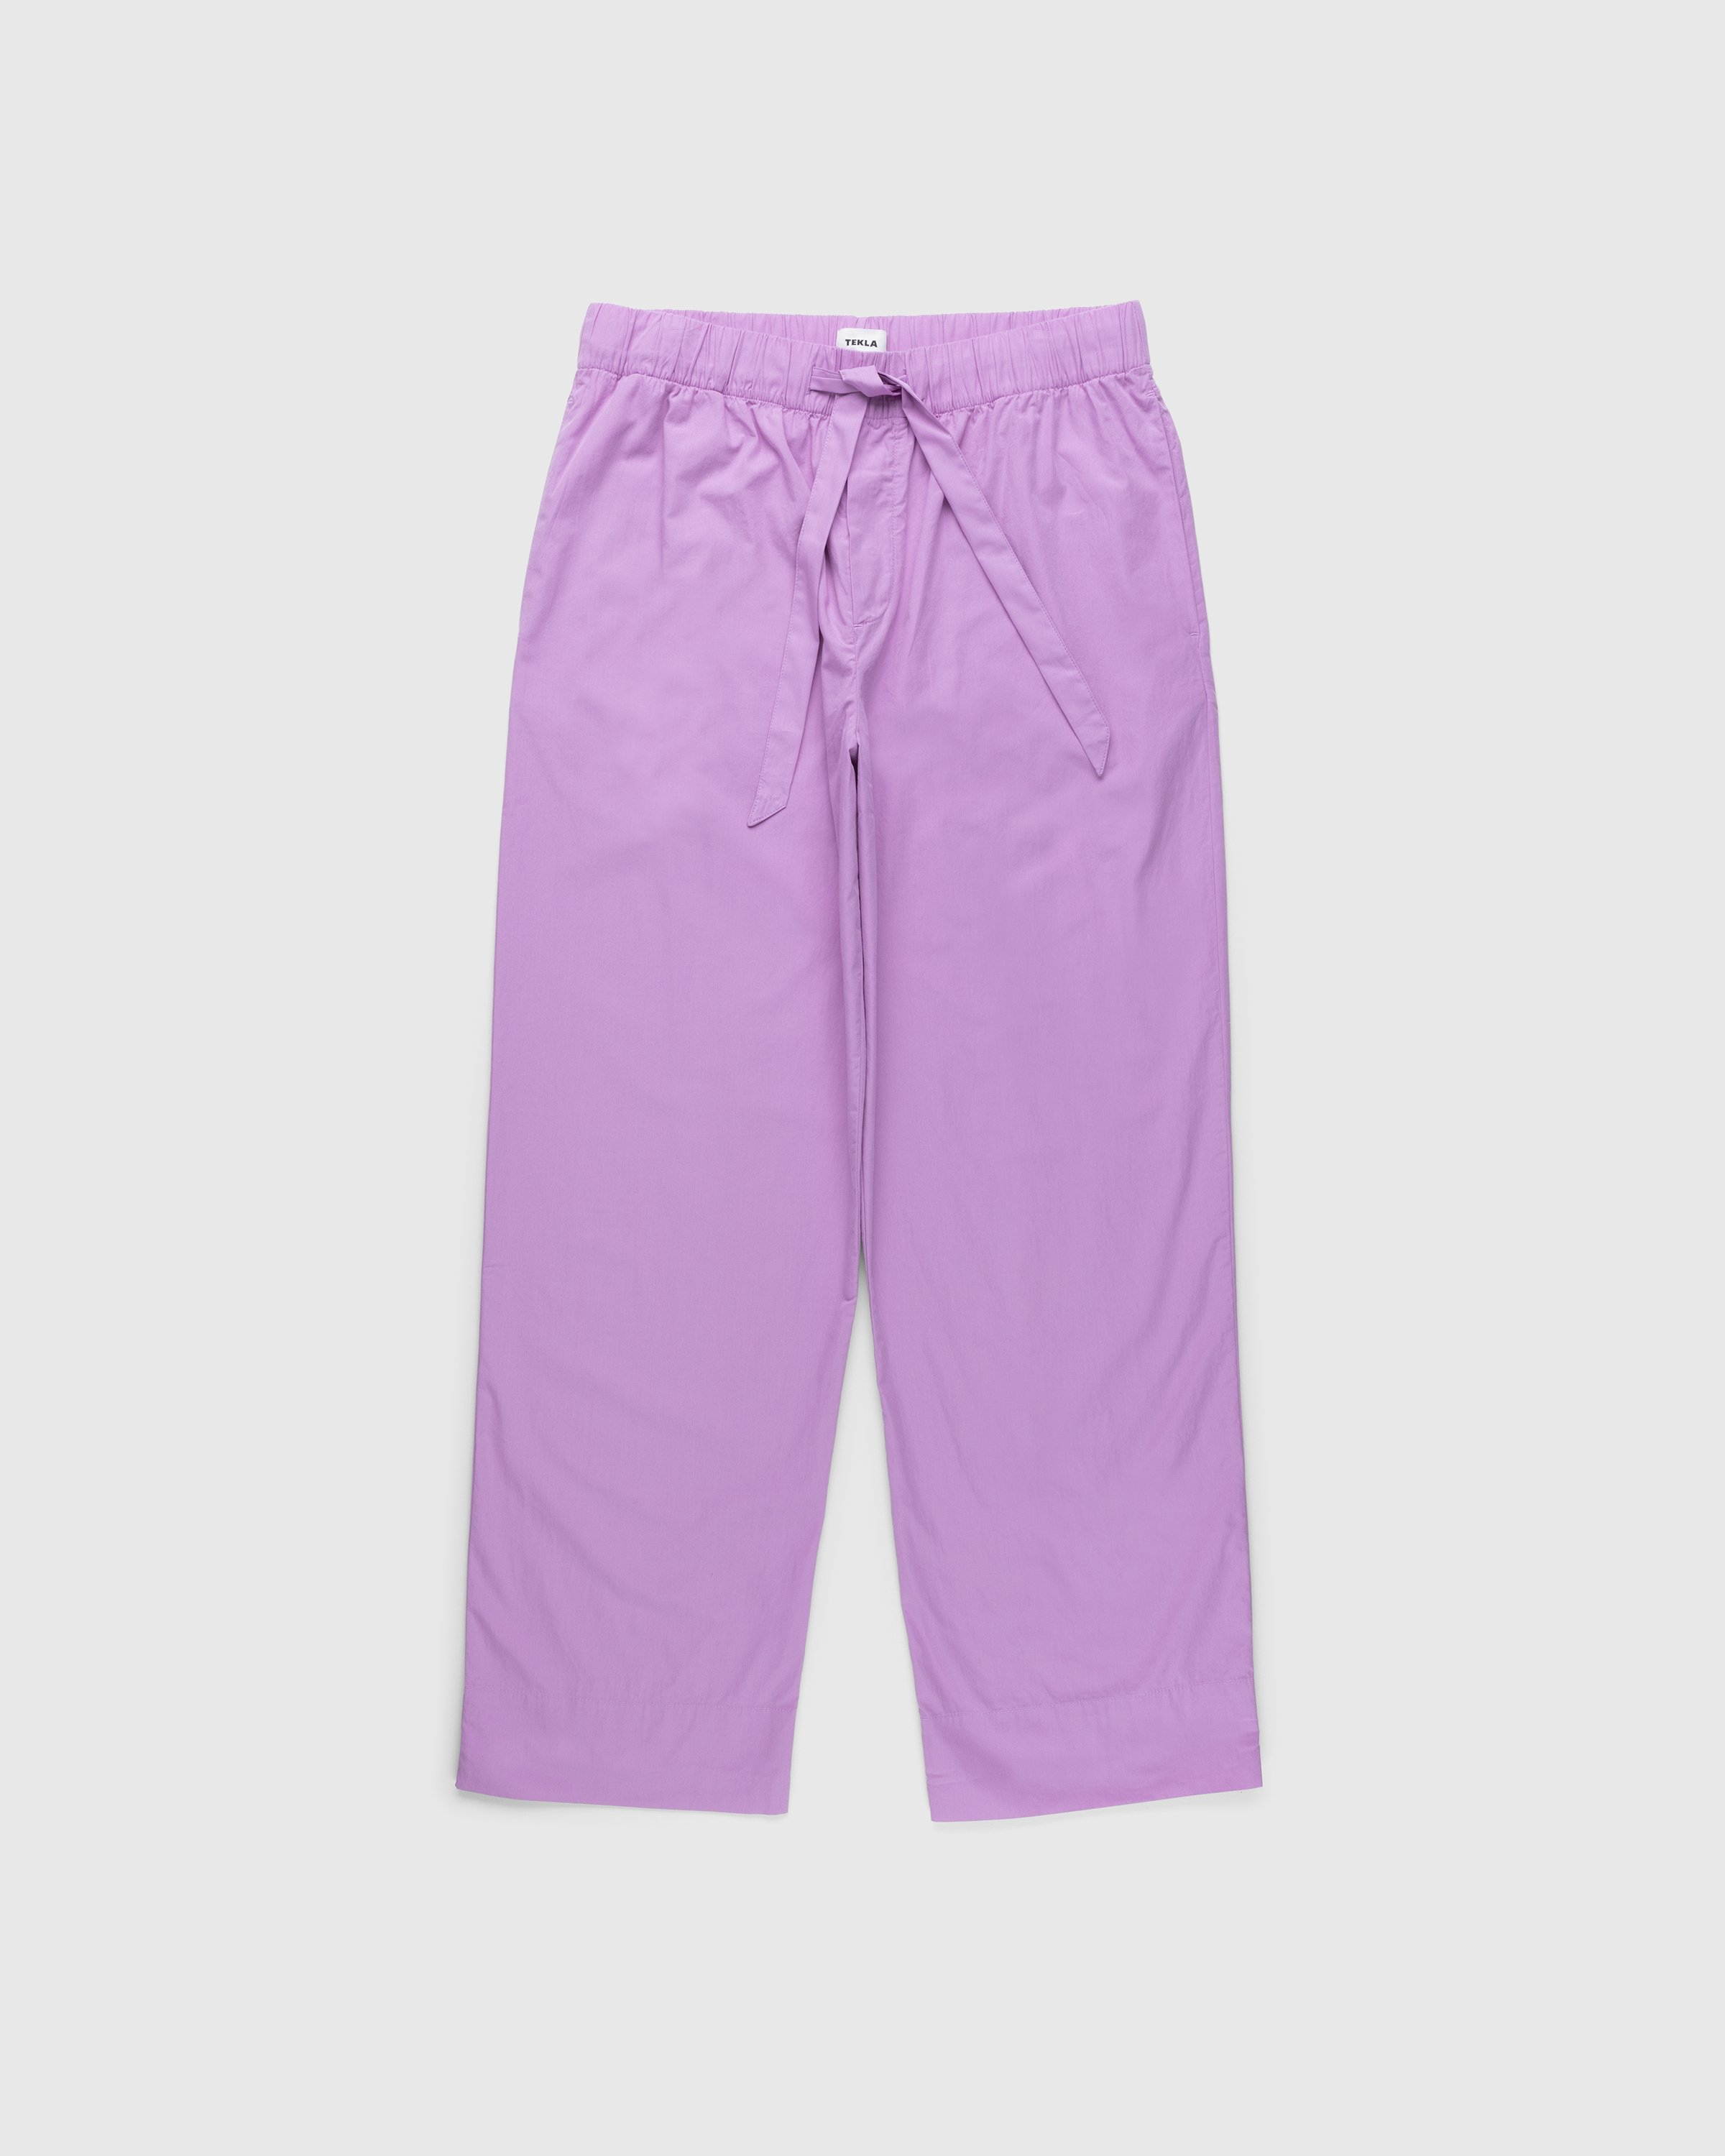 Tekla - Cotton Poplin Pyjamas Pants Purple Pink - Clothing - Pink - Image 1